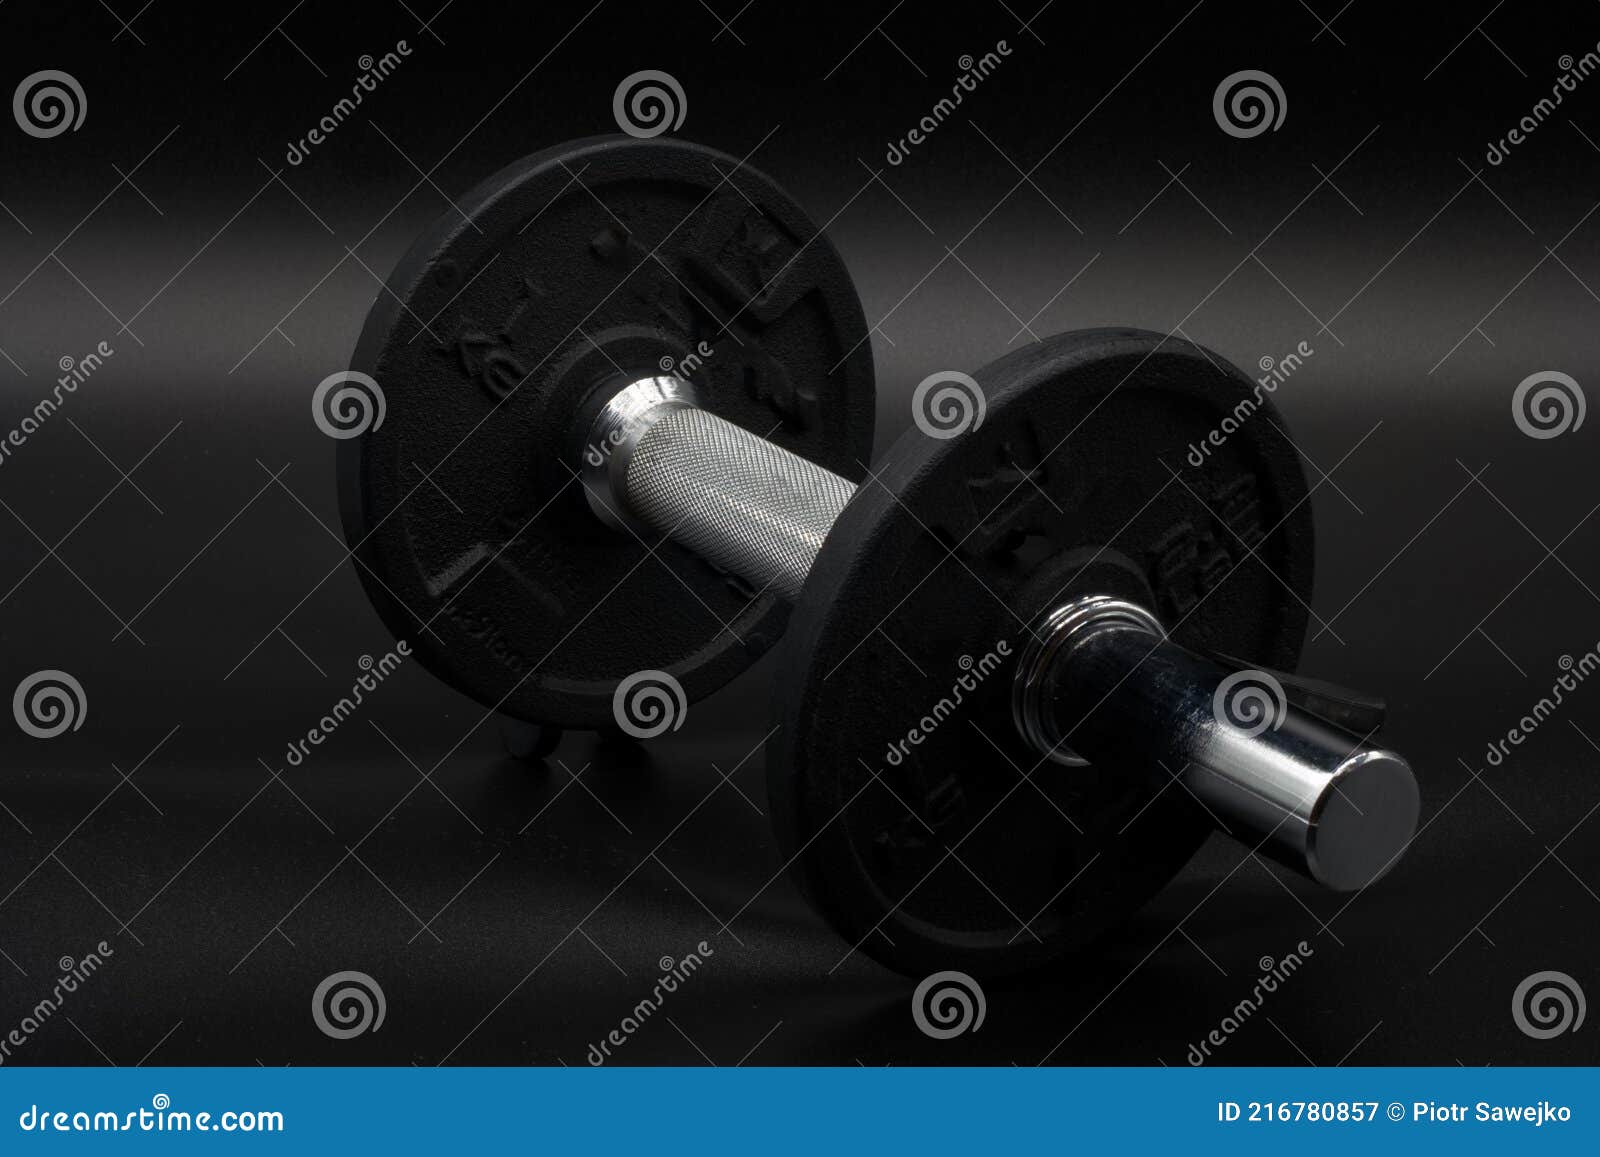 hantle weight sport gym fitness black background